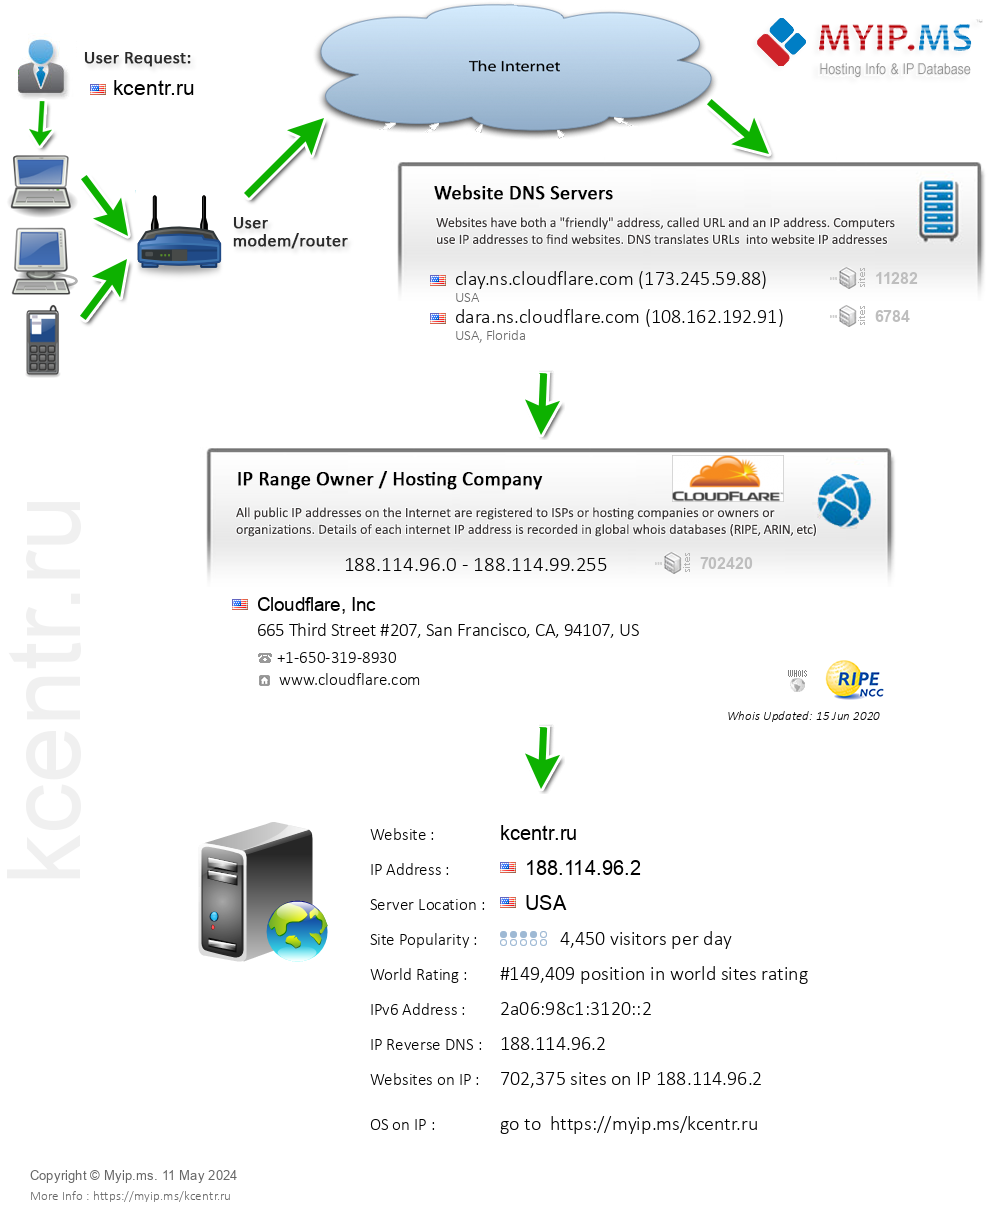 Kcentr.ru - Website Hosting Visual IP Diagram